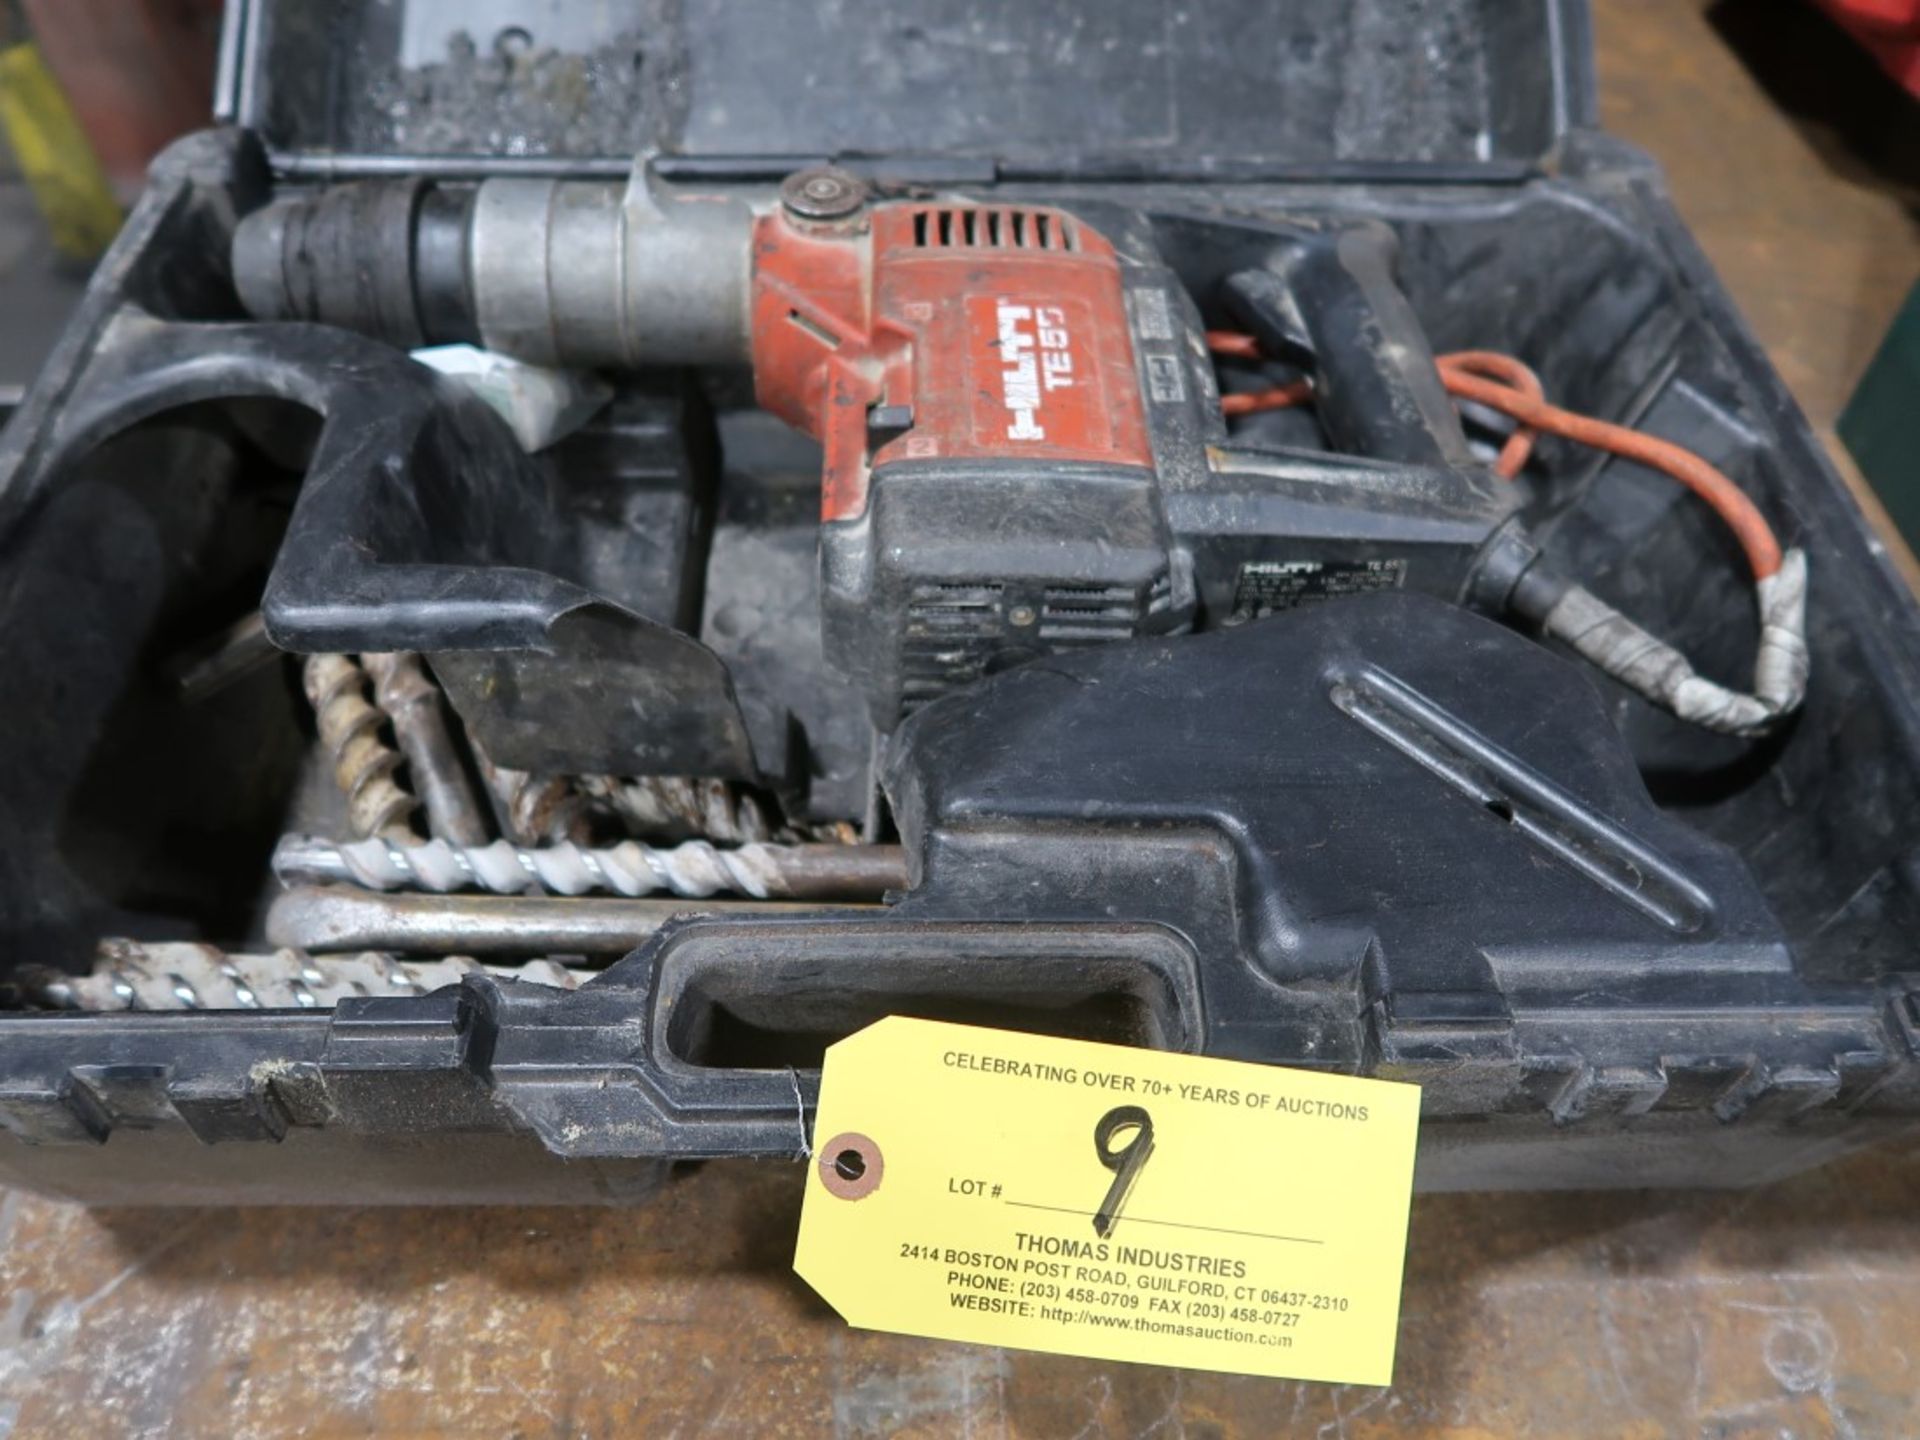 Hilti TE55 Electric Rotary Hammer Drill & Bits w/ Case